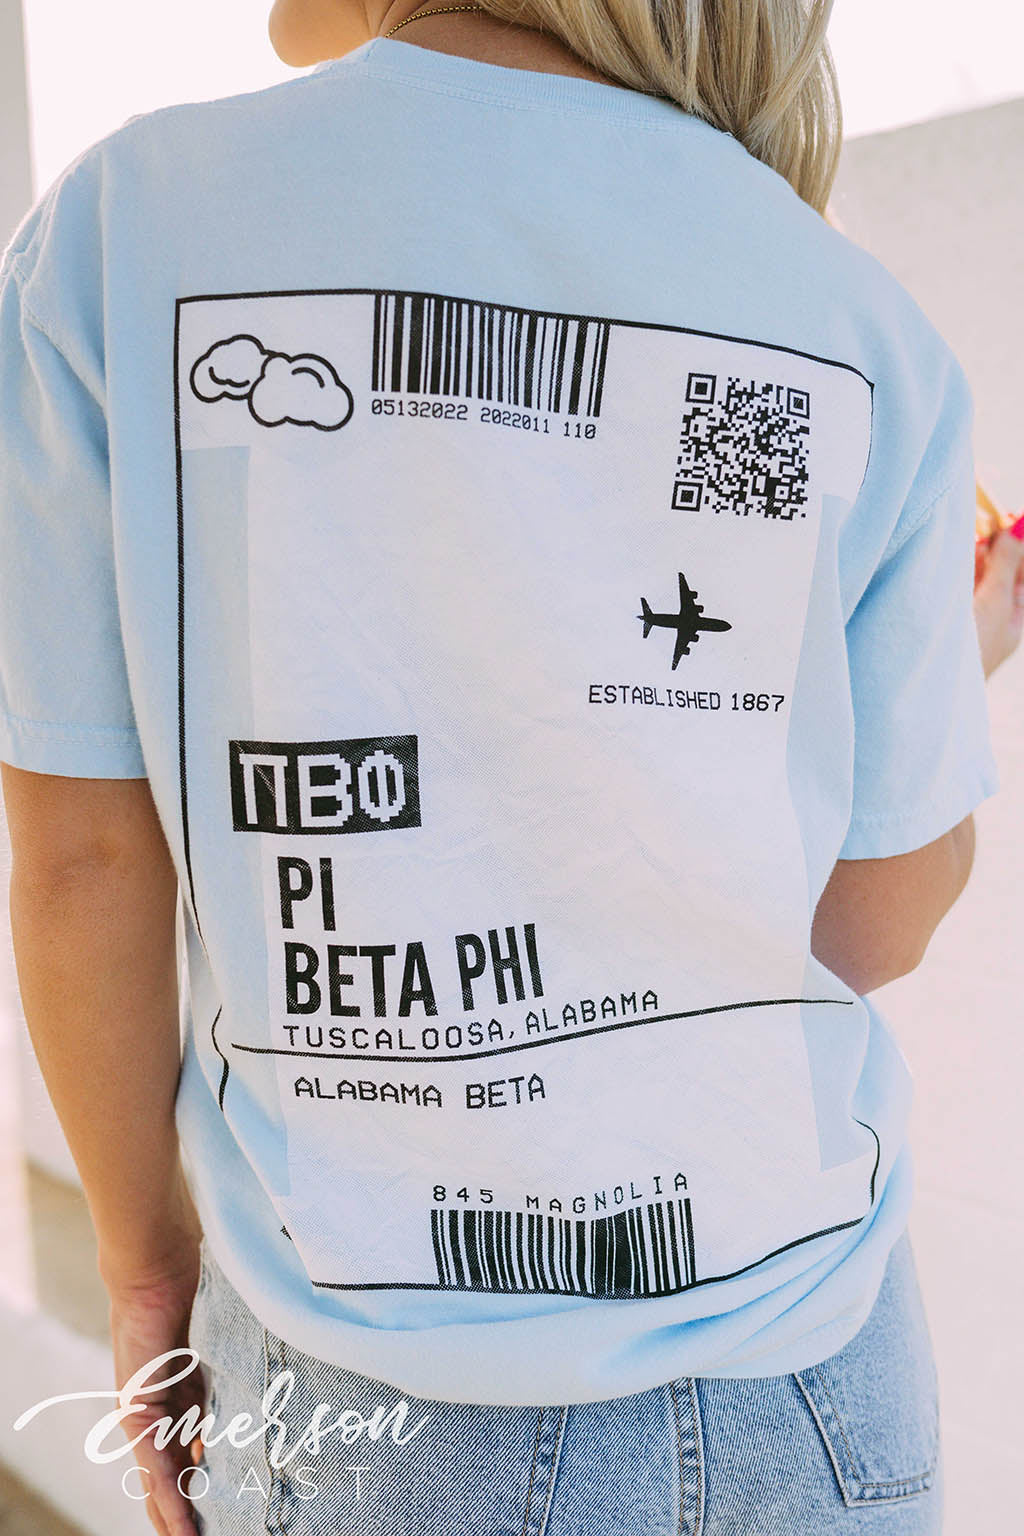 Pi Beta Phi PR Plane Ticket Tee